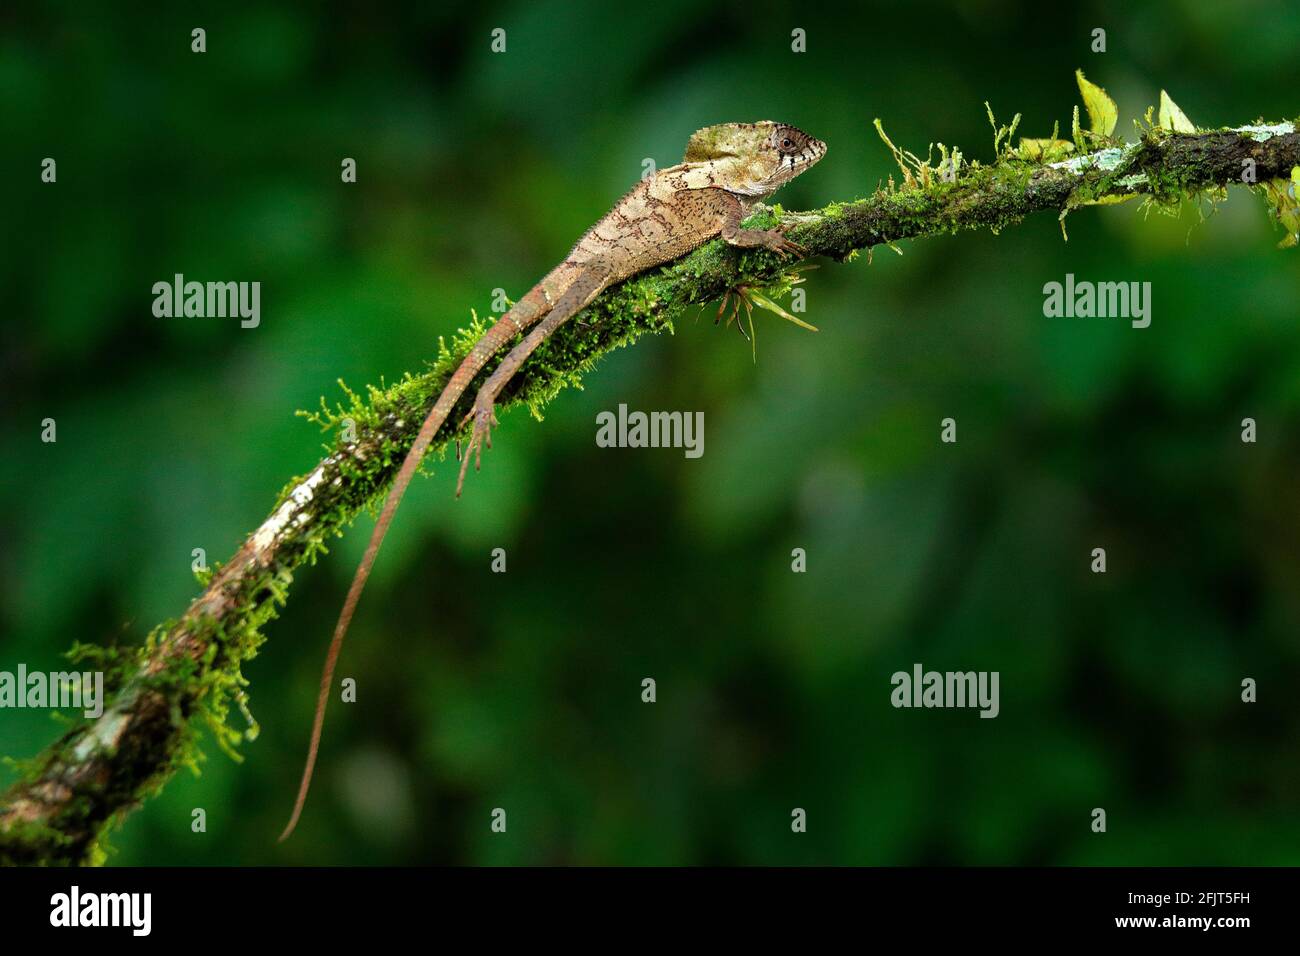 Helmeted basilisk iguana, Corytophanes cristatus, sitting on the tree branch. Lizard in the nature habitat, green forest vegetation. Beautiful reptile Stock Photo